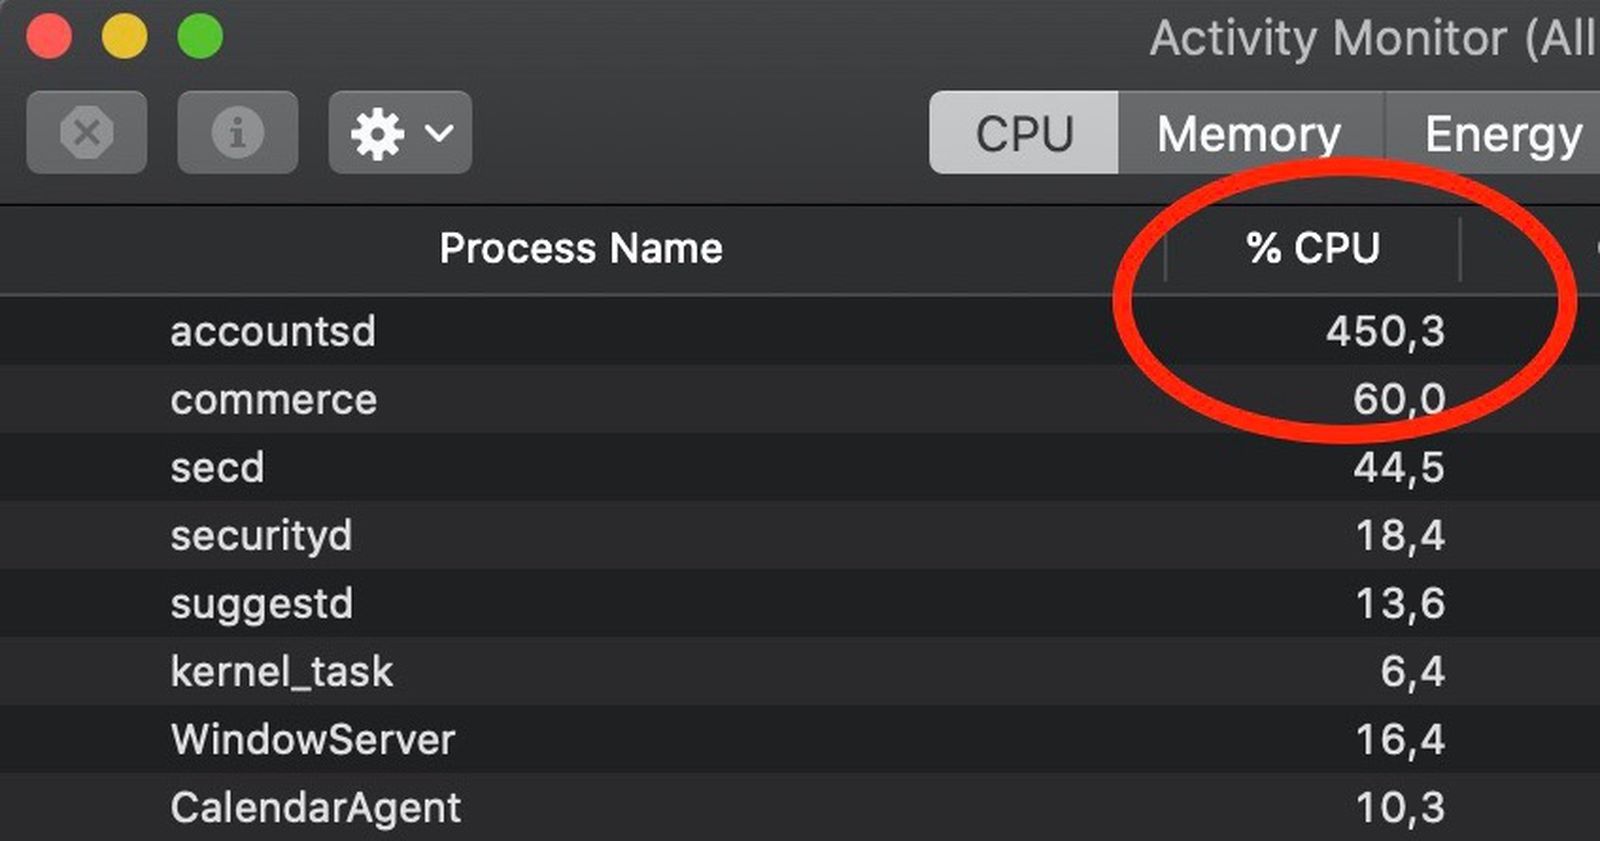 Accountsd: How to Fix High CPU Usage on Mac - MacRumors